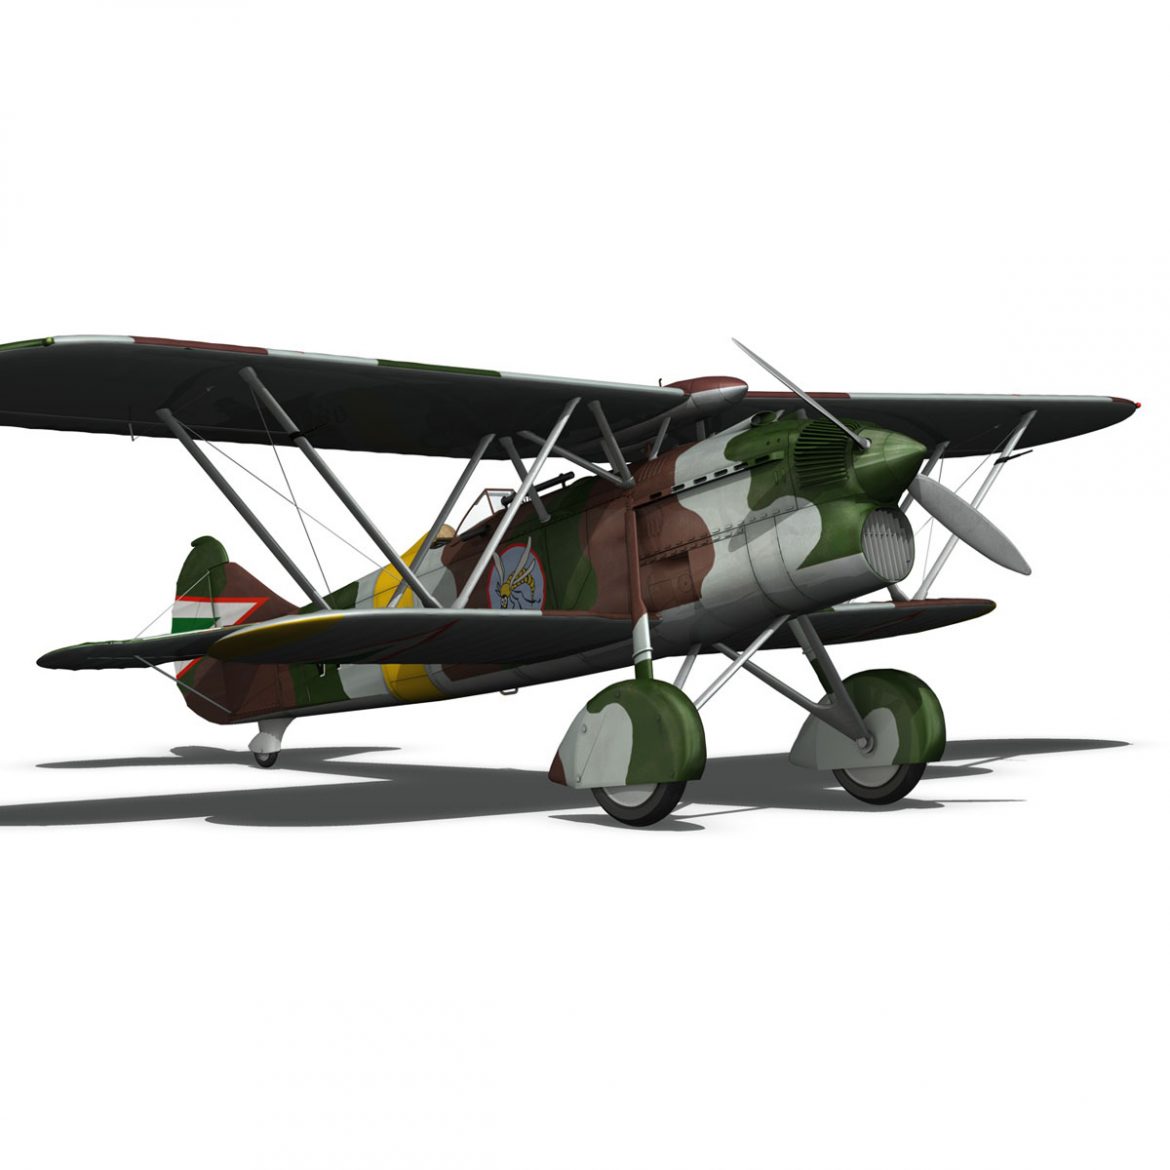 fiat cr.32 – hungarian royal air force – v159 3d model fbx c4d lwo obj 299974